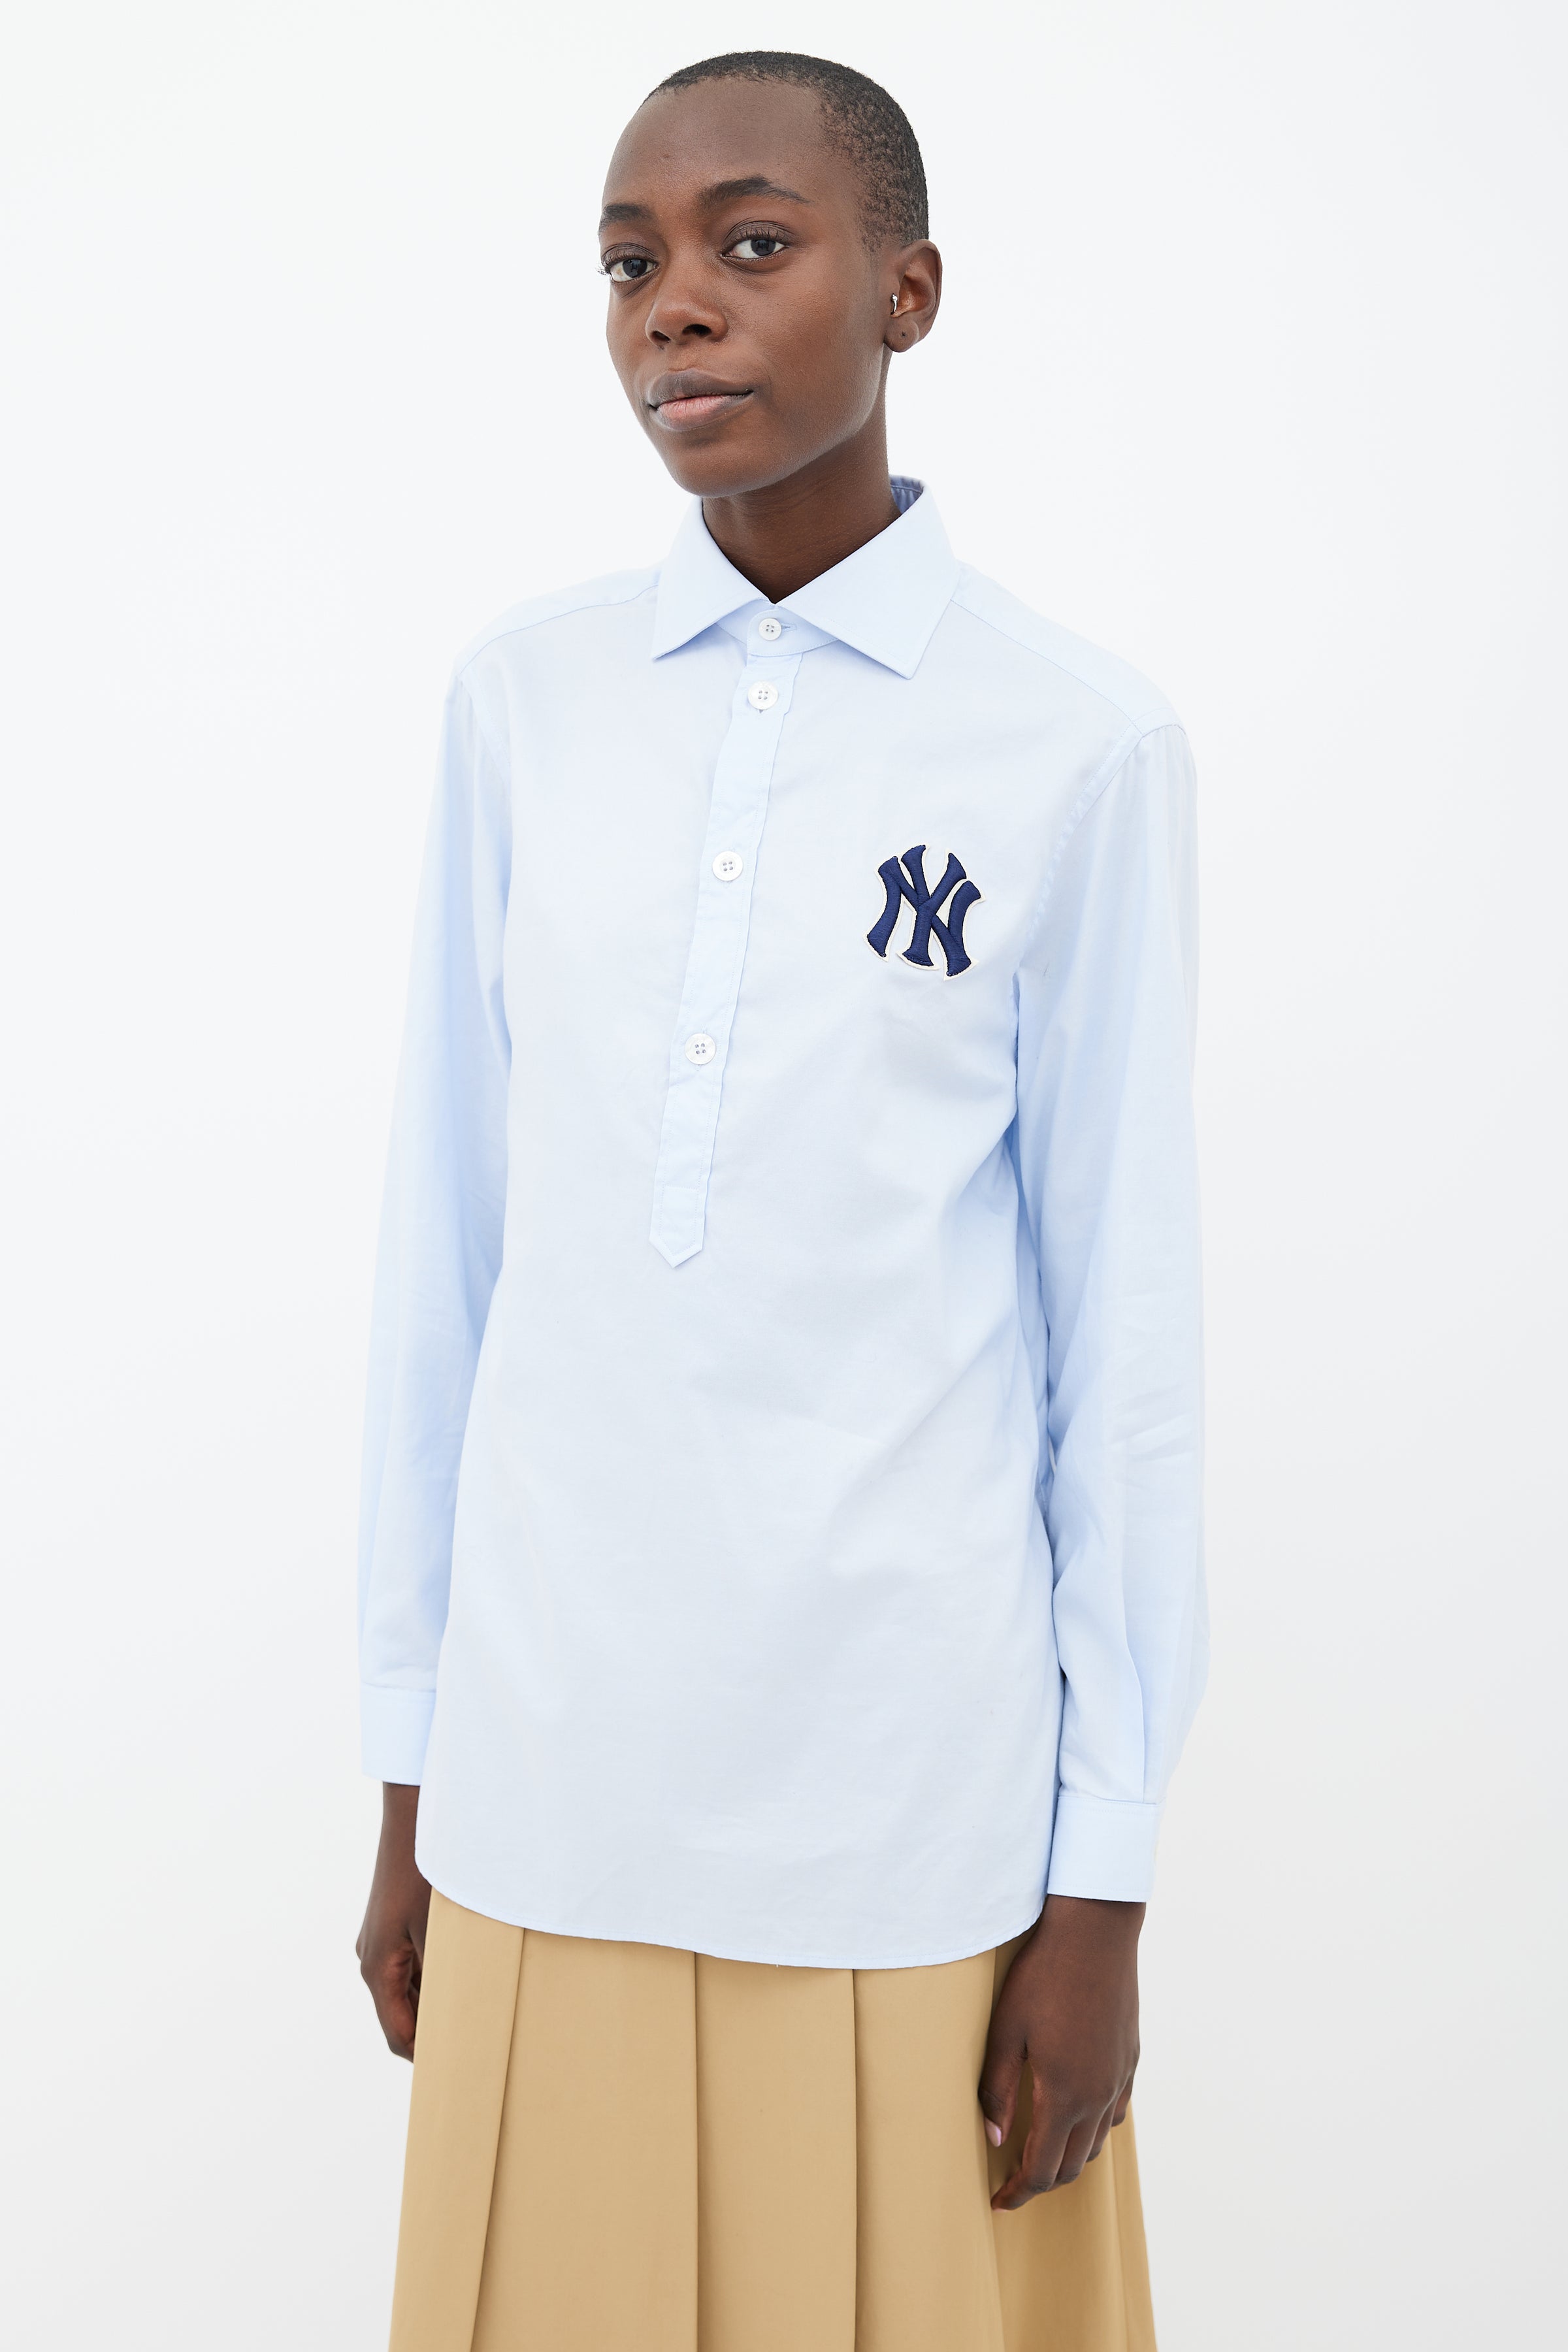 Gucci new York Yankees t shirt, Men's Fashion, Tops & Sets